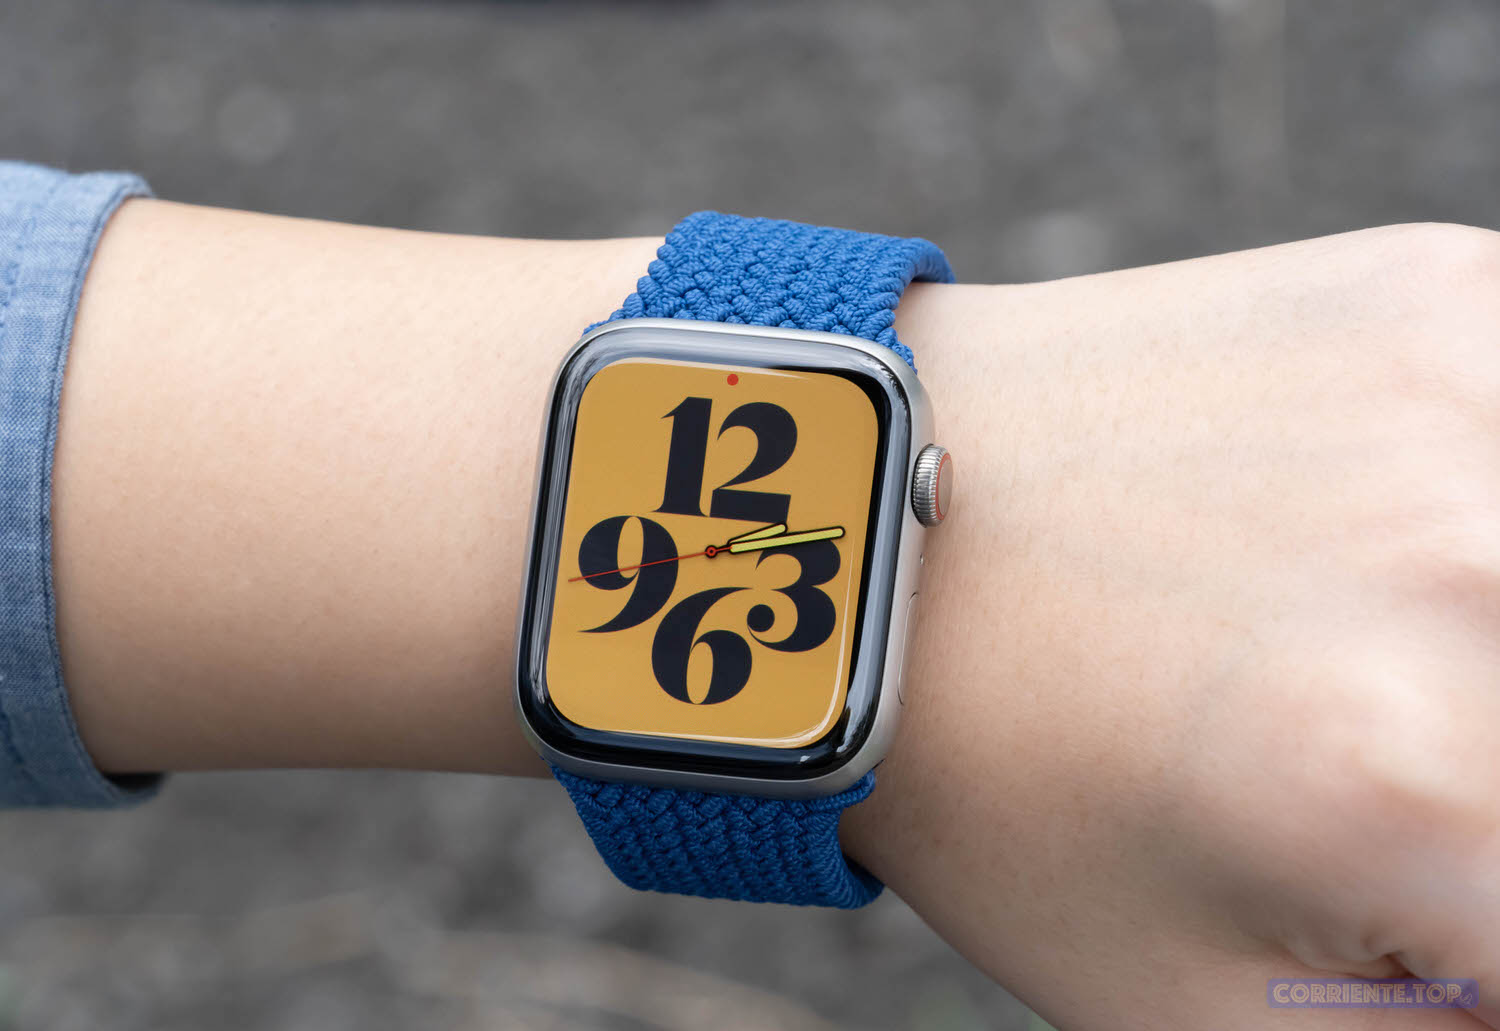 Apple Watch Series 7｣ は41mm・45mmのラインナップとの噂 | CoRRiENTE.top